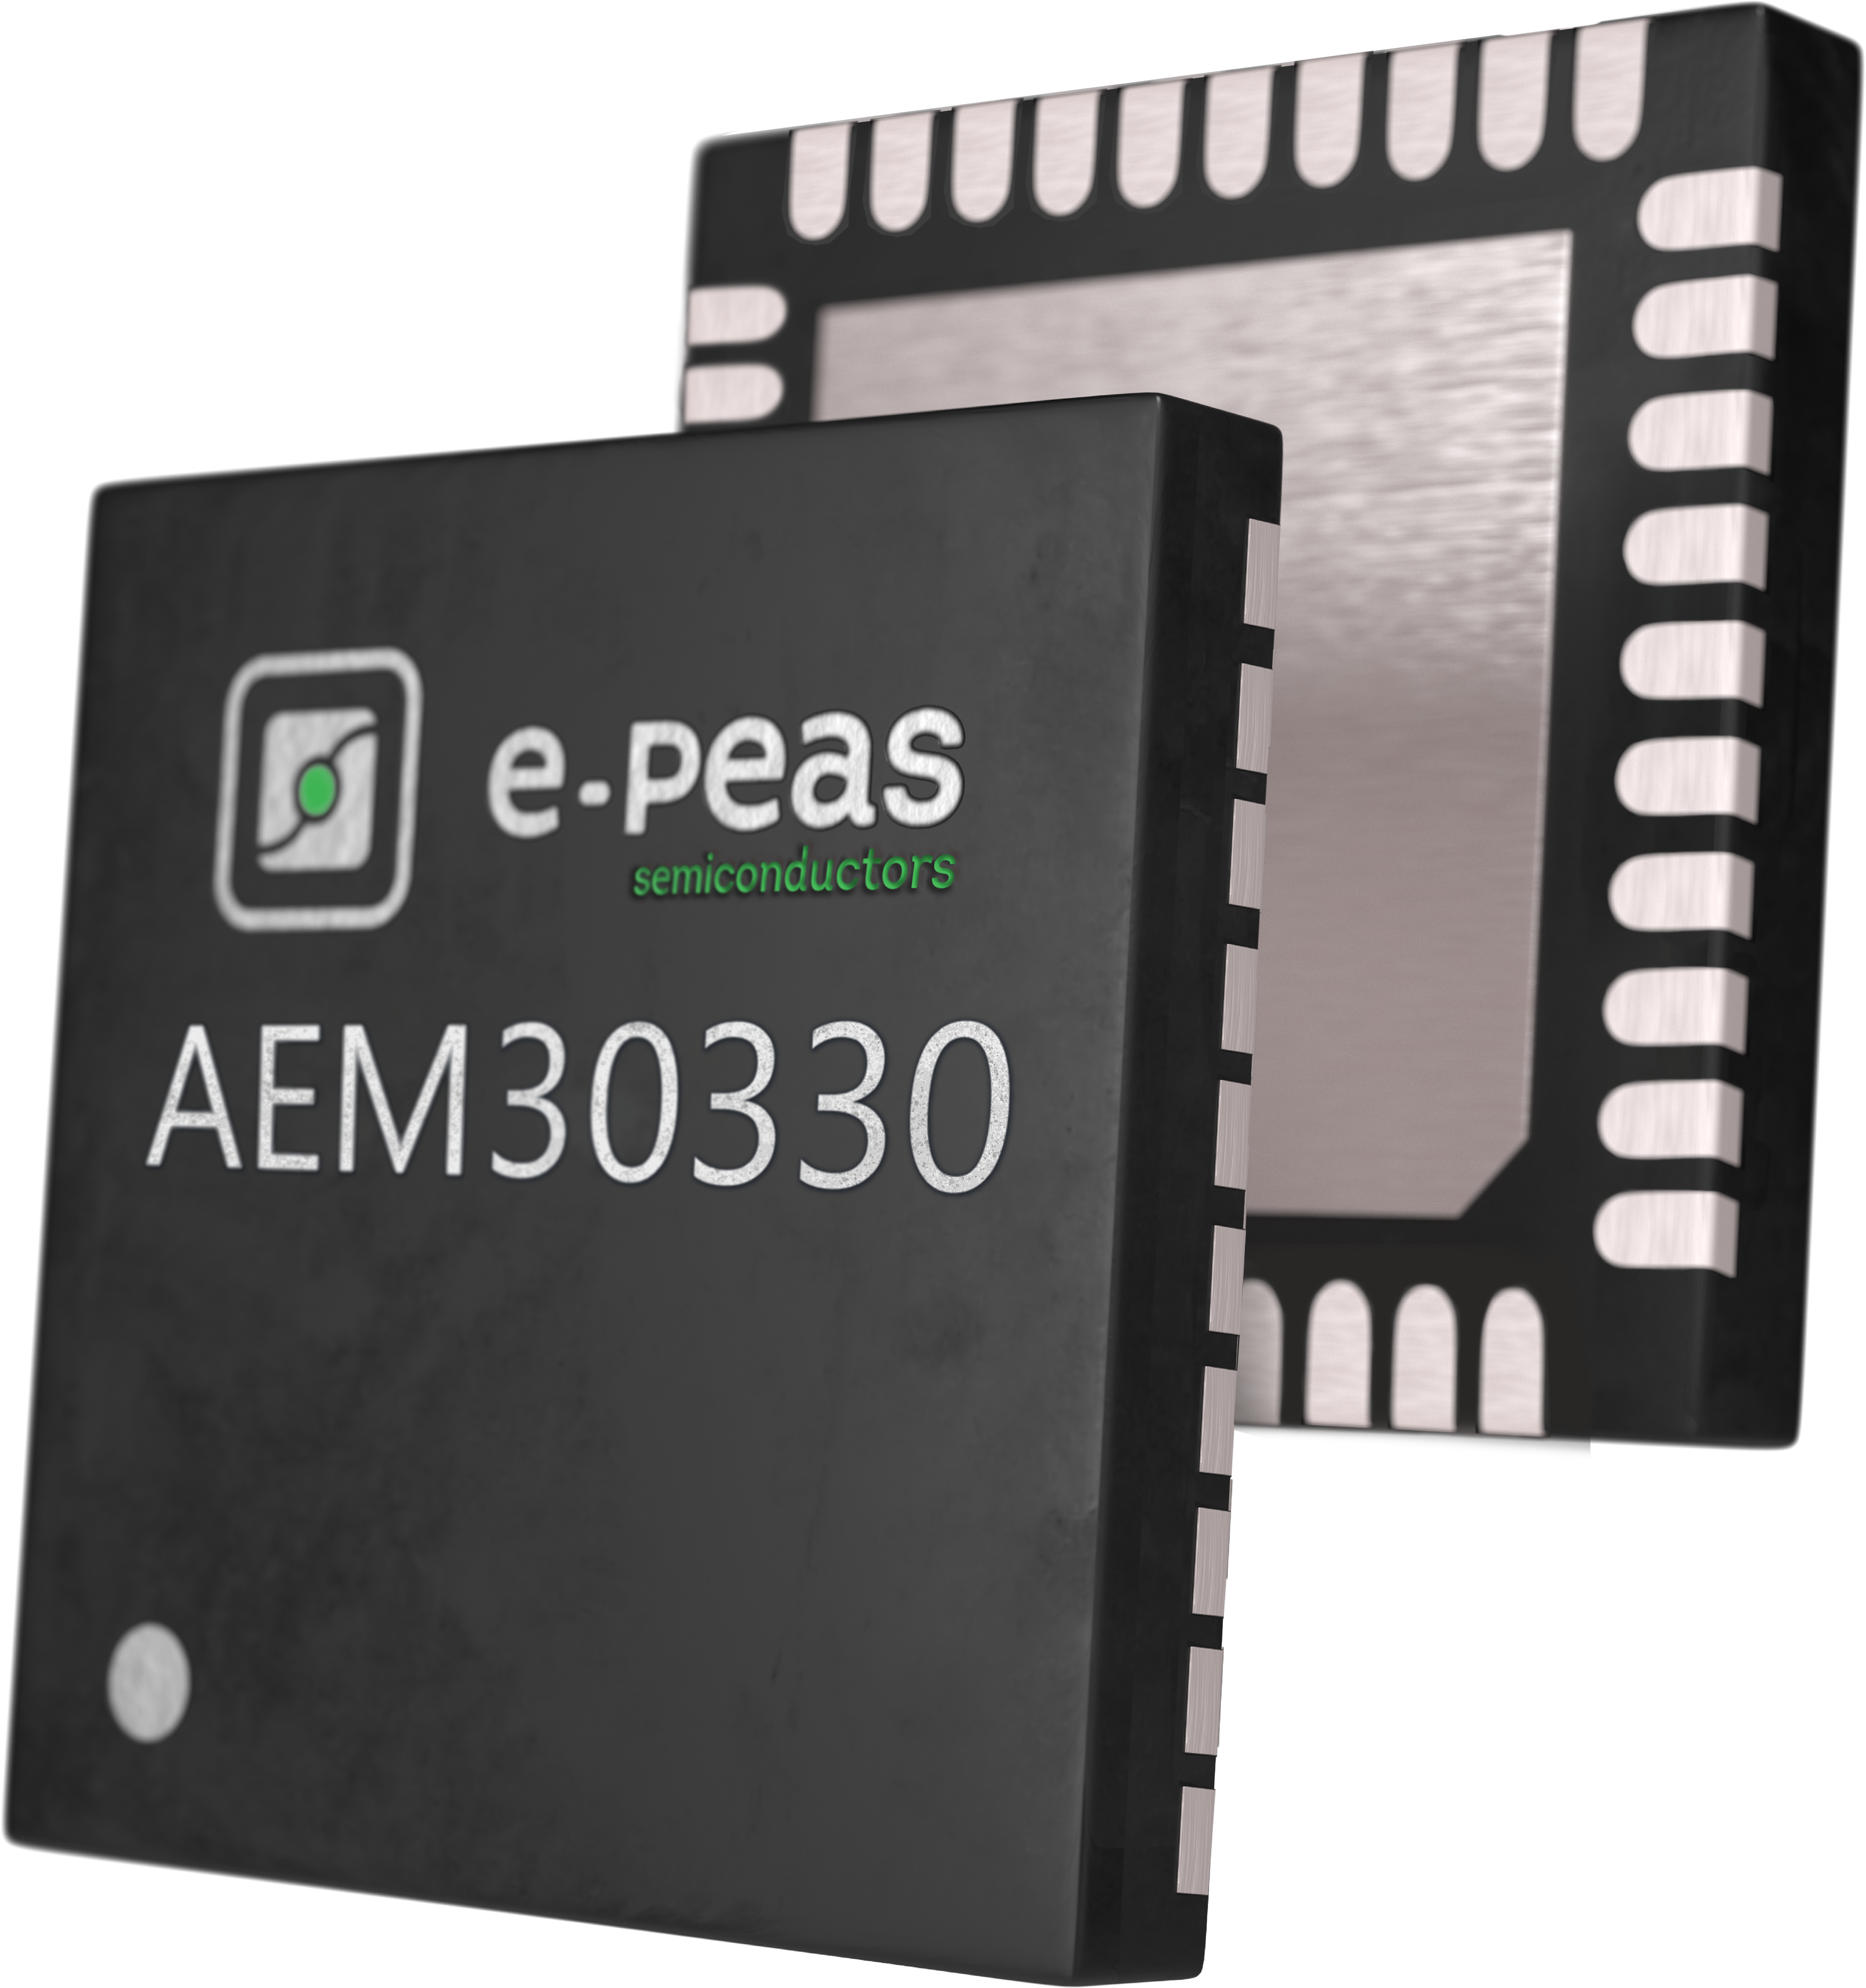 e-peas-AEM30330-RF-energy-harvesting-40pins